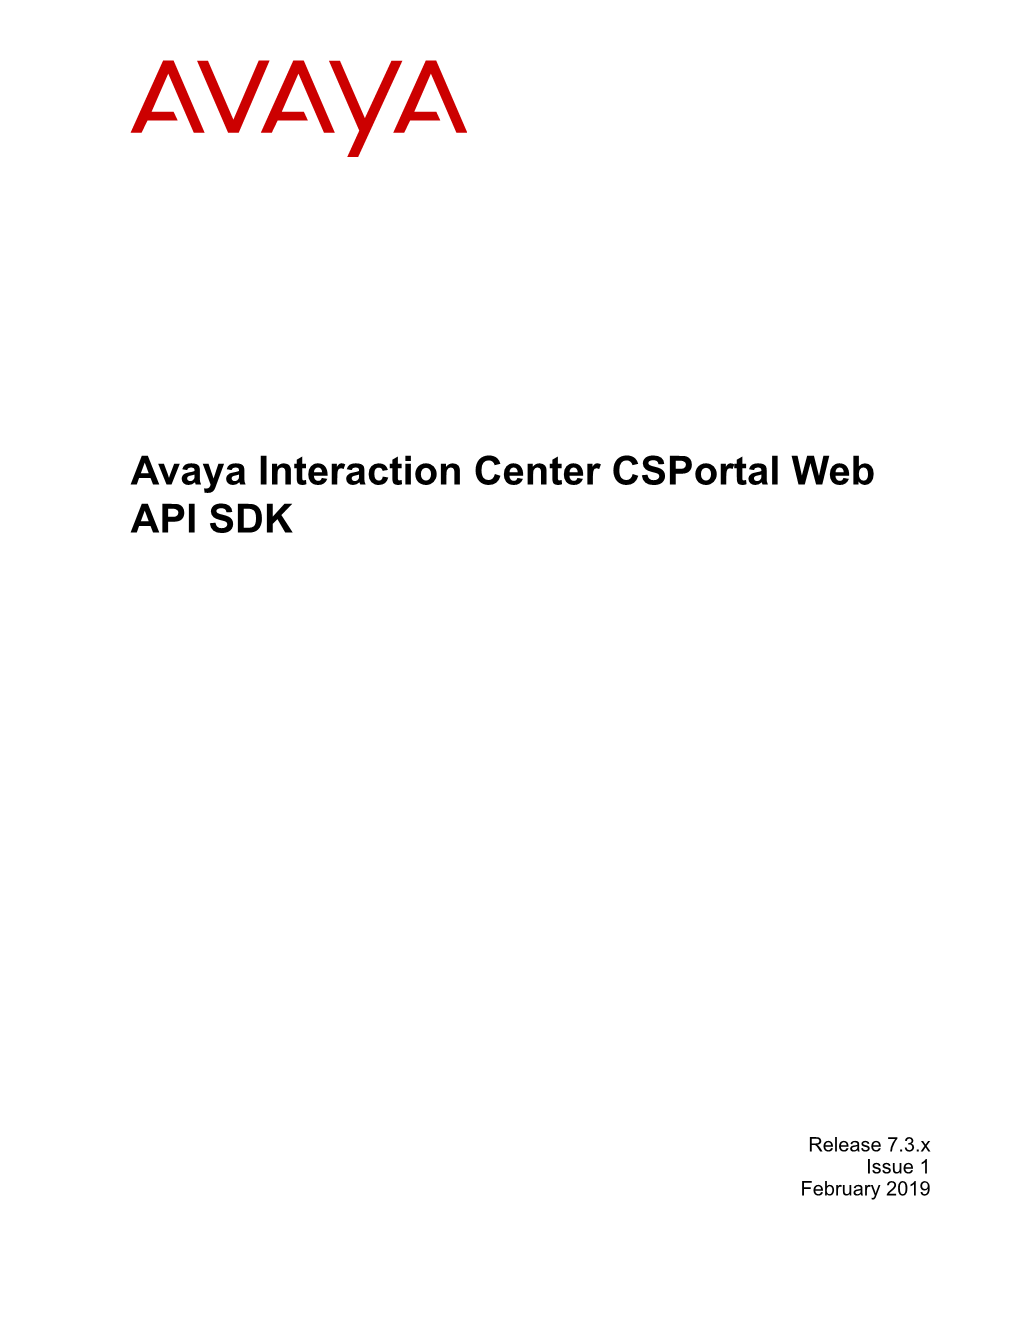 Avaya Interaction Center Csportal Web API SDK